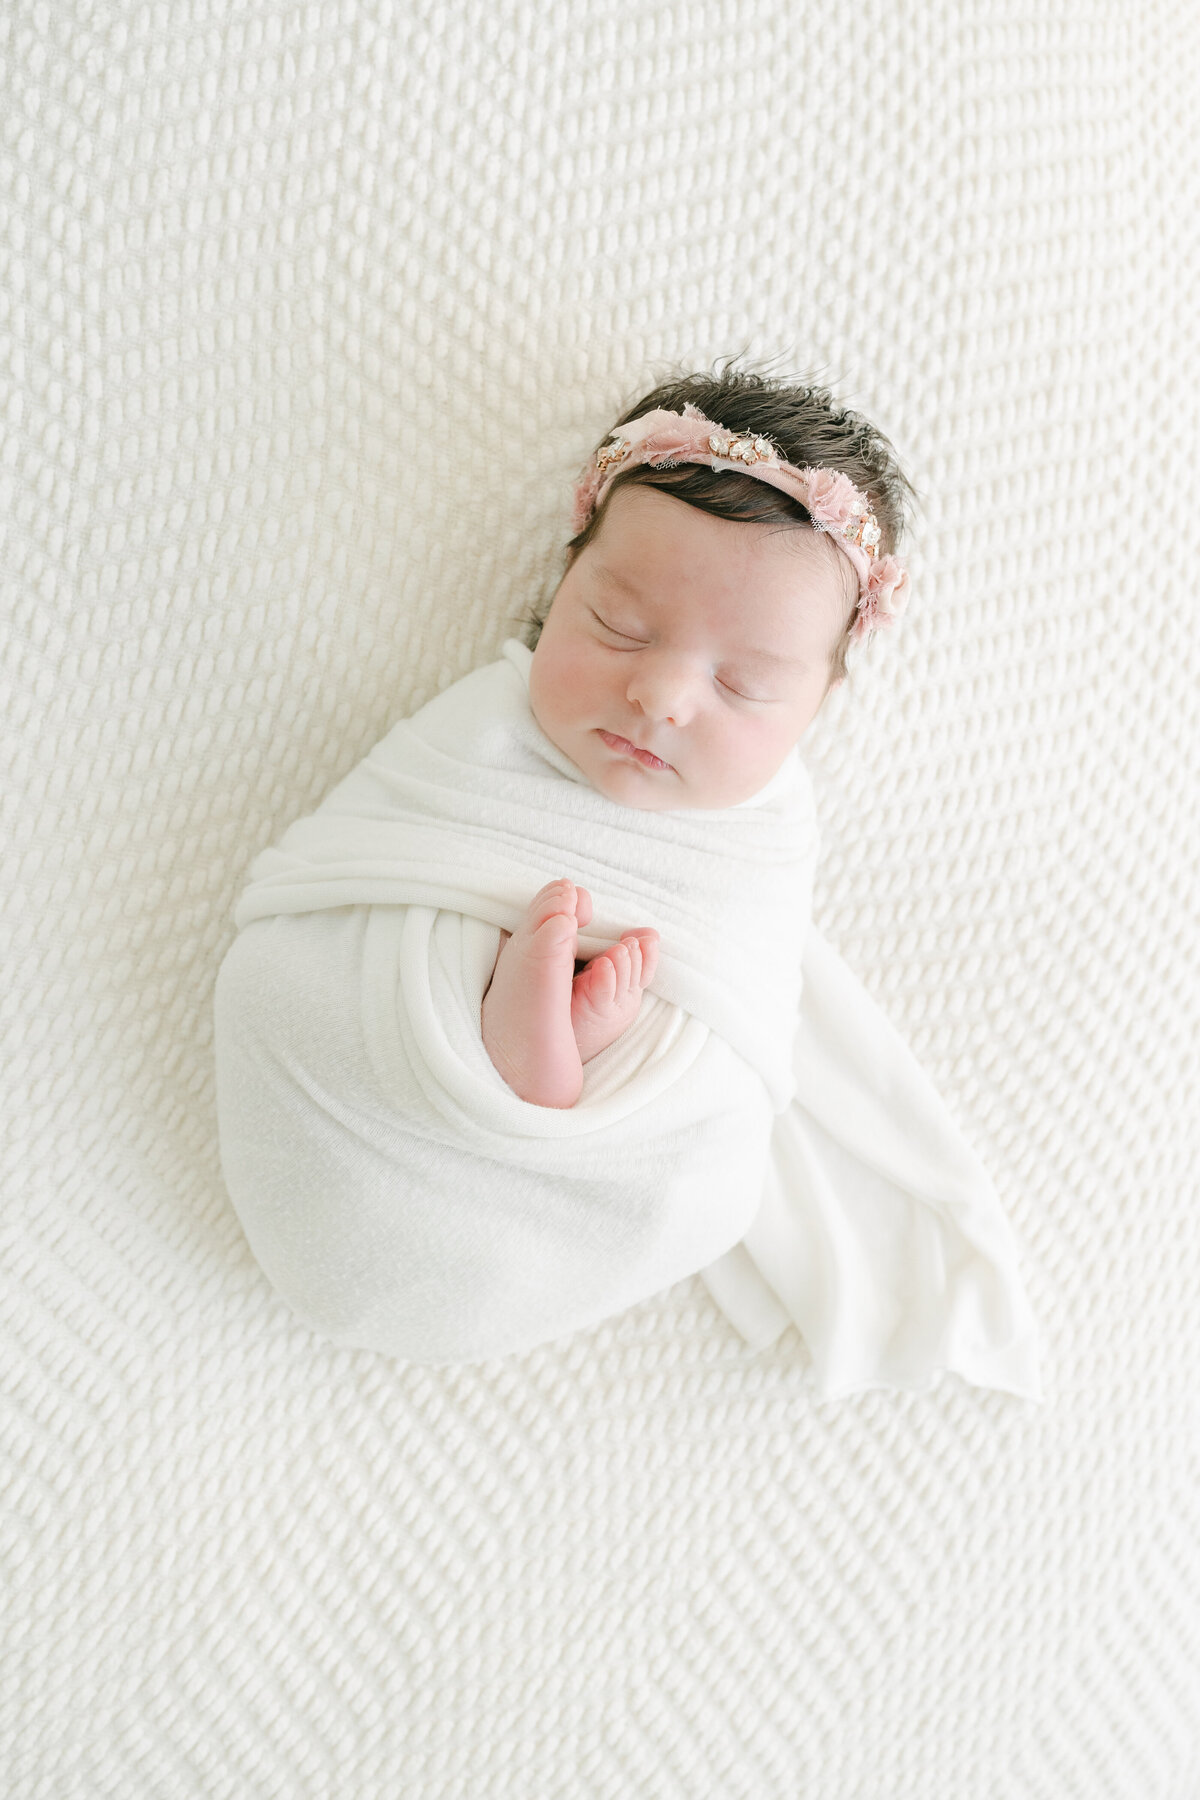 lehigh-valley-newborn-photographer-evelyn-40